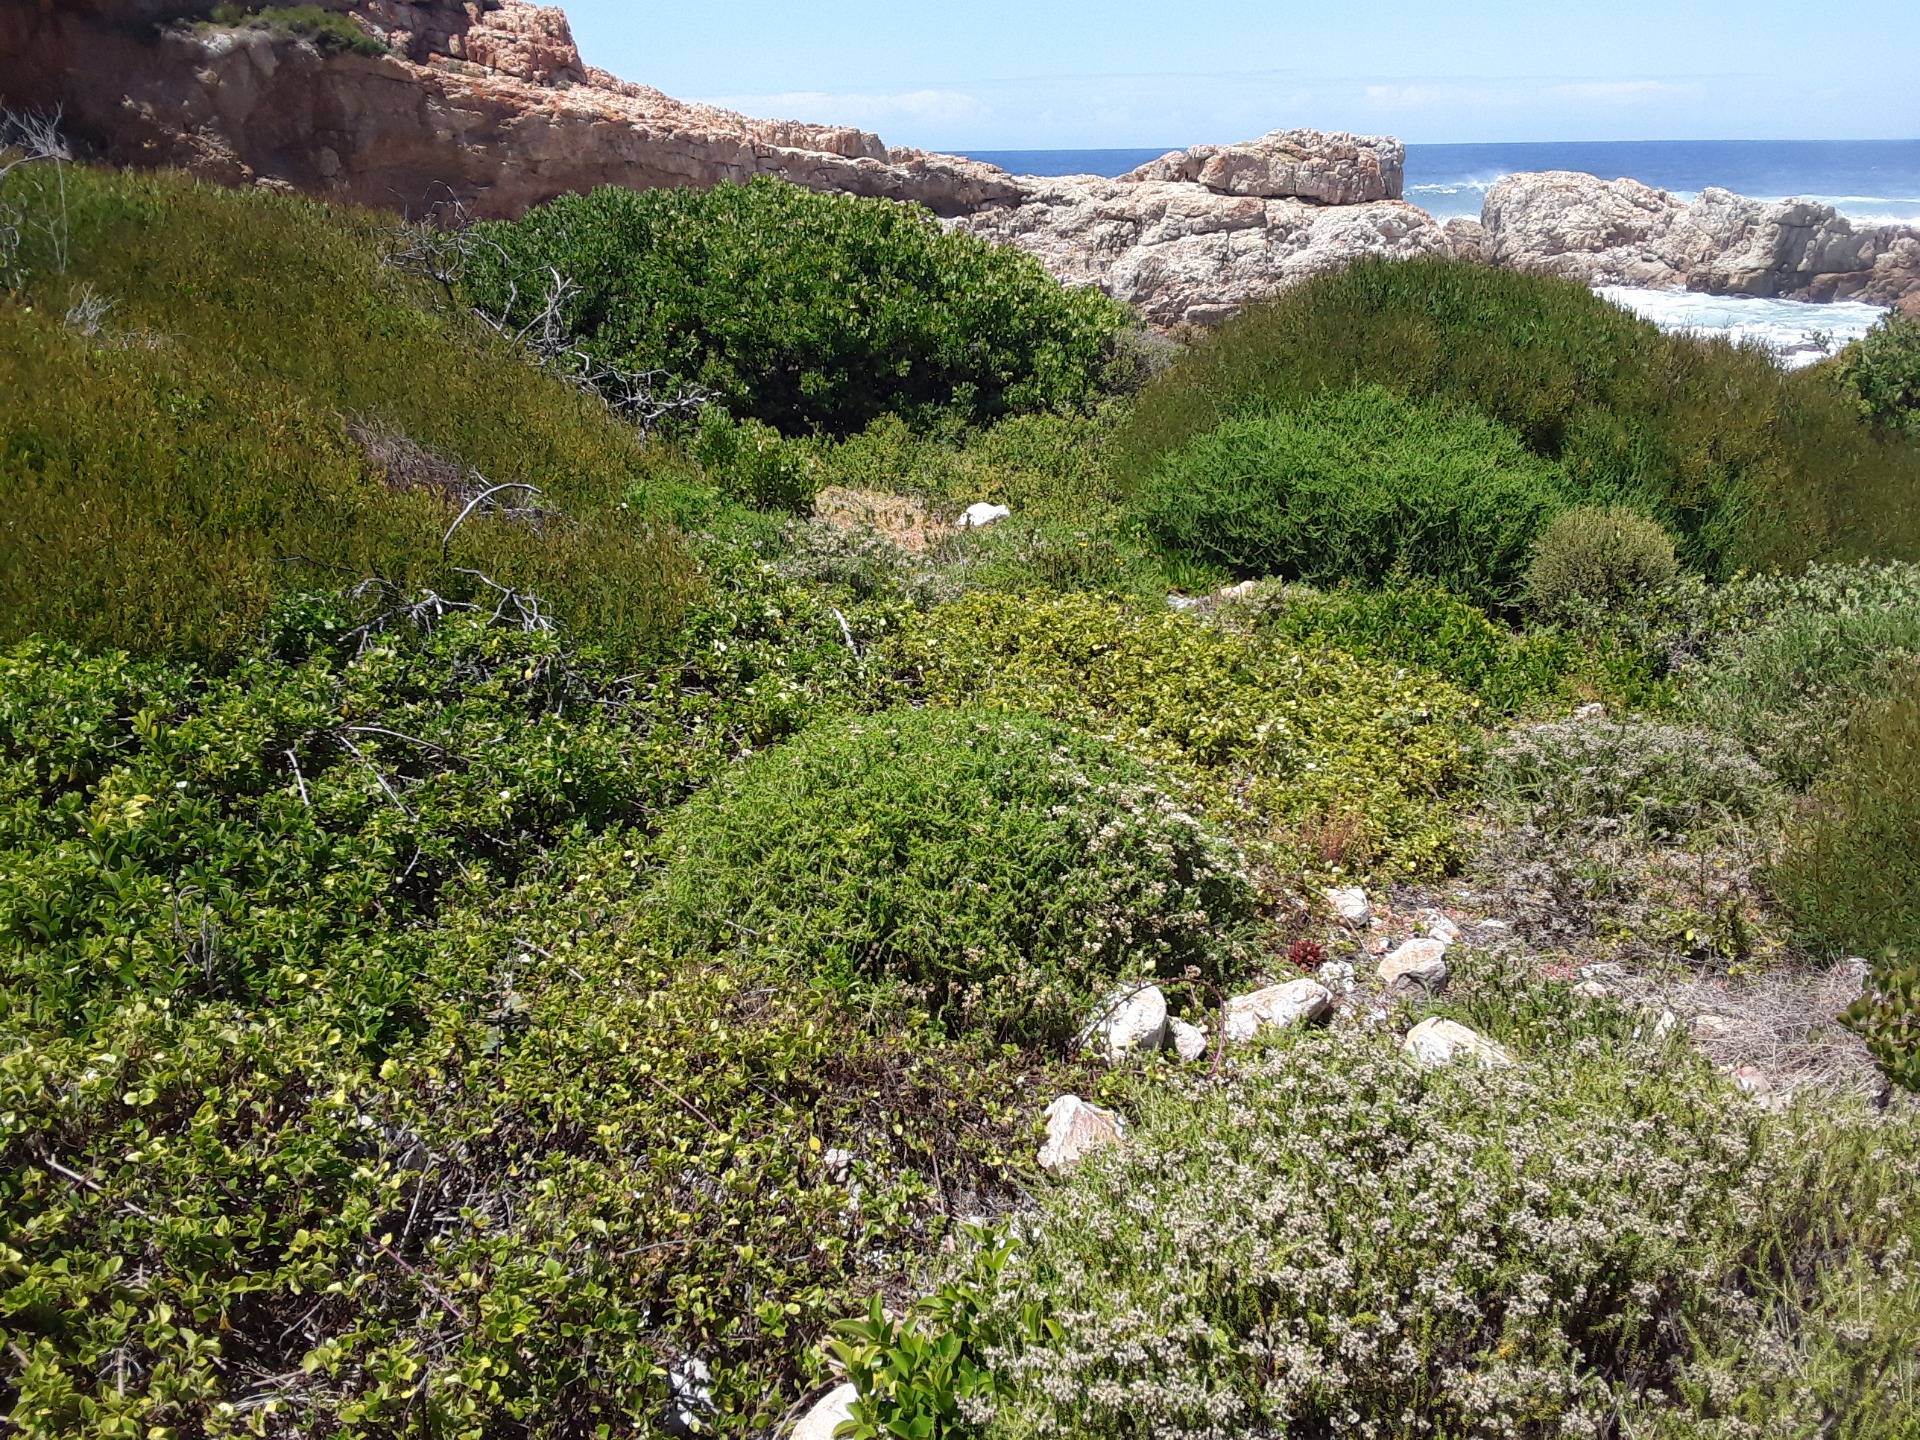 Lush vegetation making the shoreline more habitable